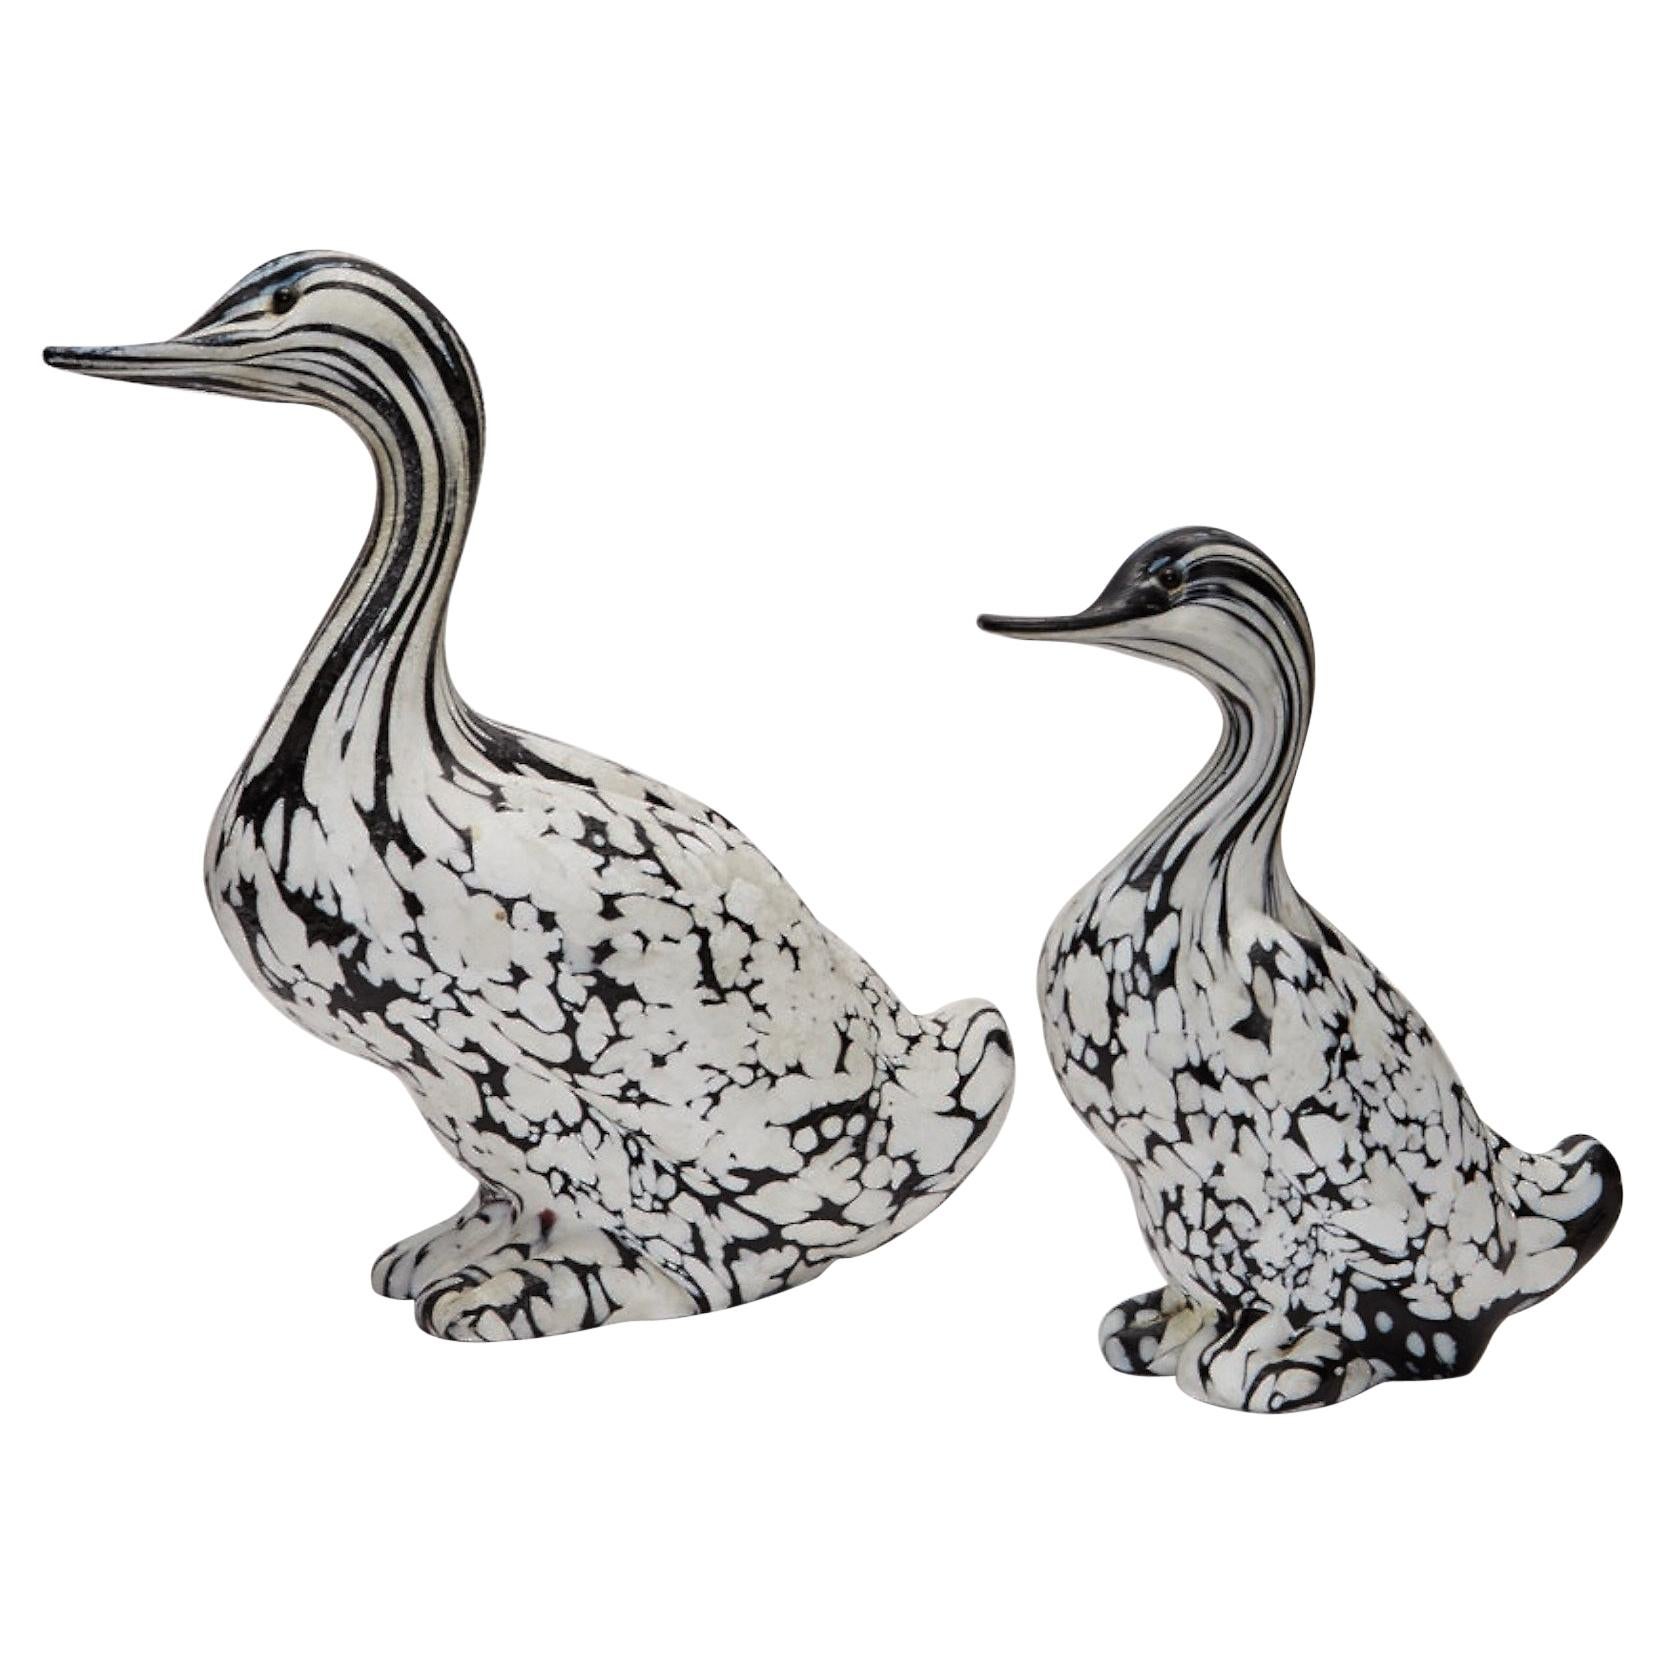 Archimede Seguso Pair of  Murano Glass Animal Sculptures of Black & White Ducks